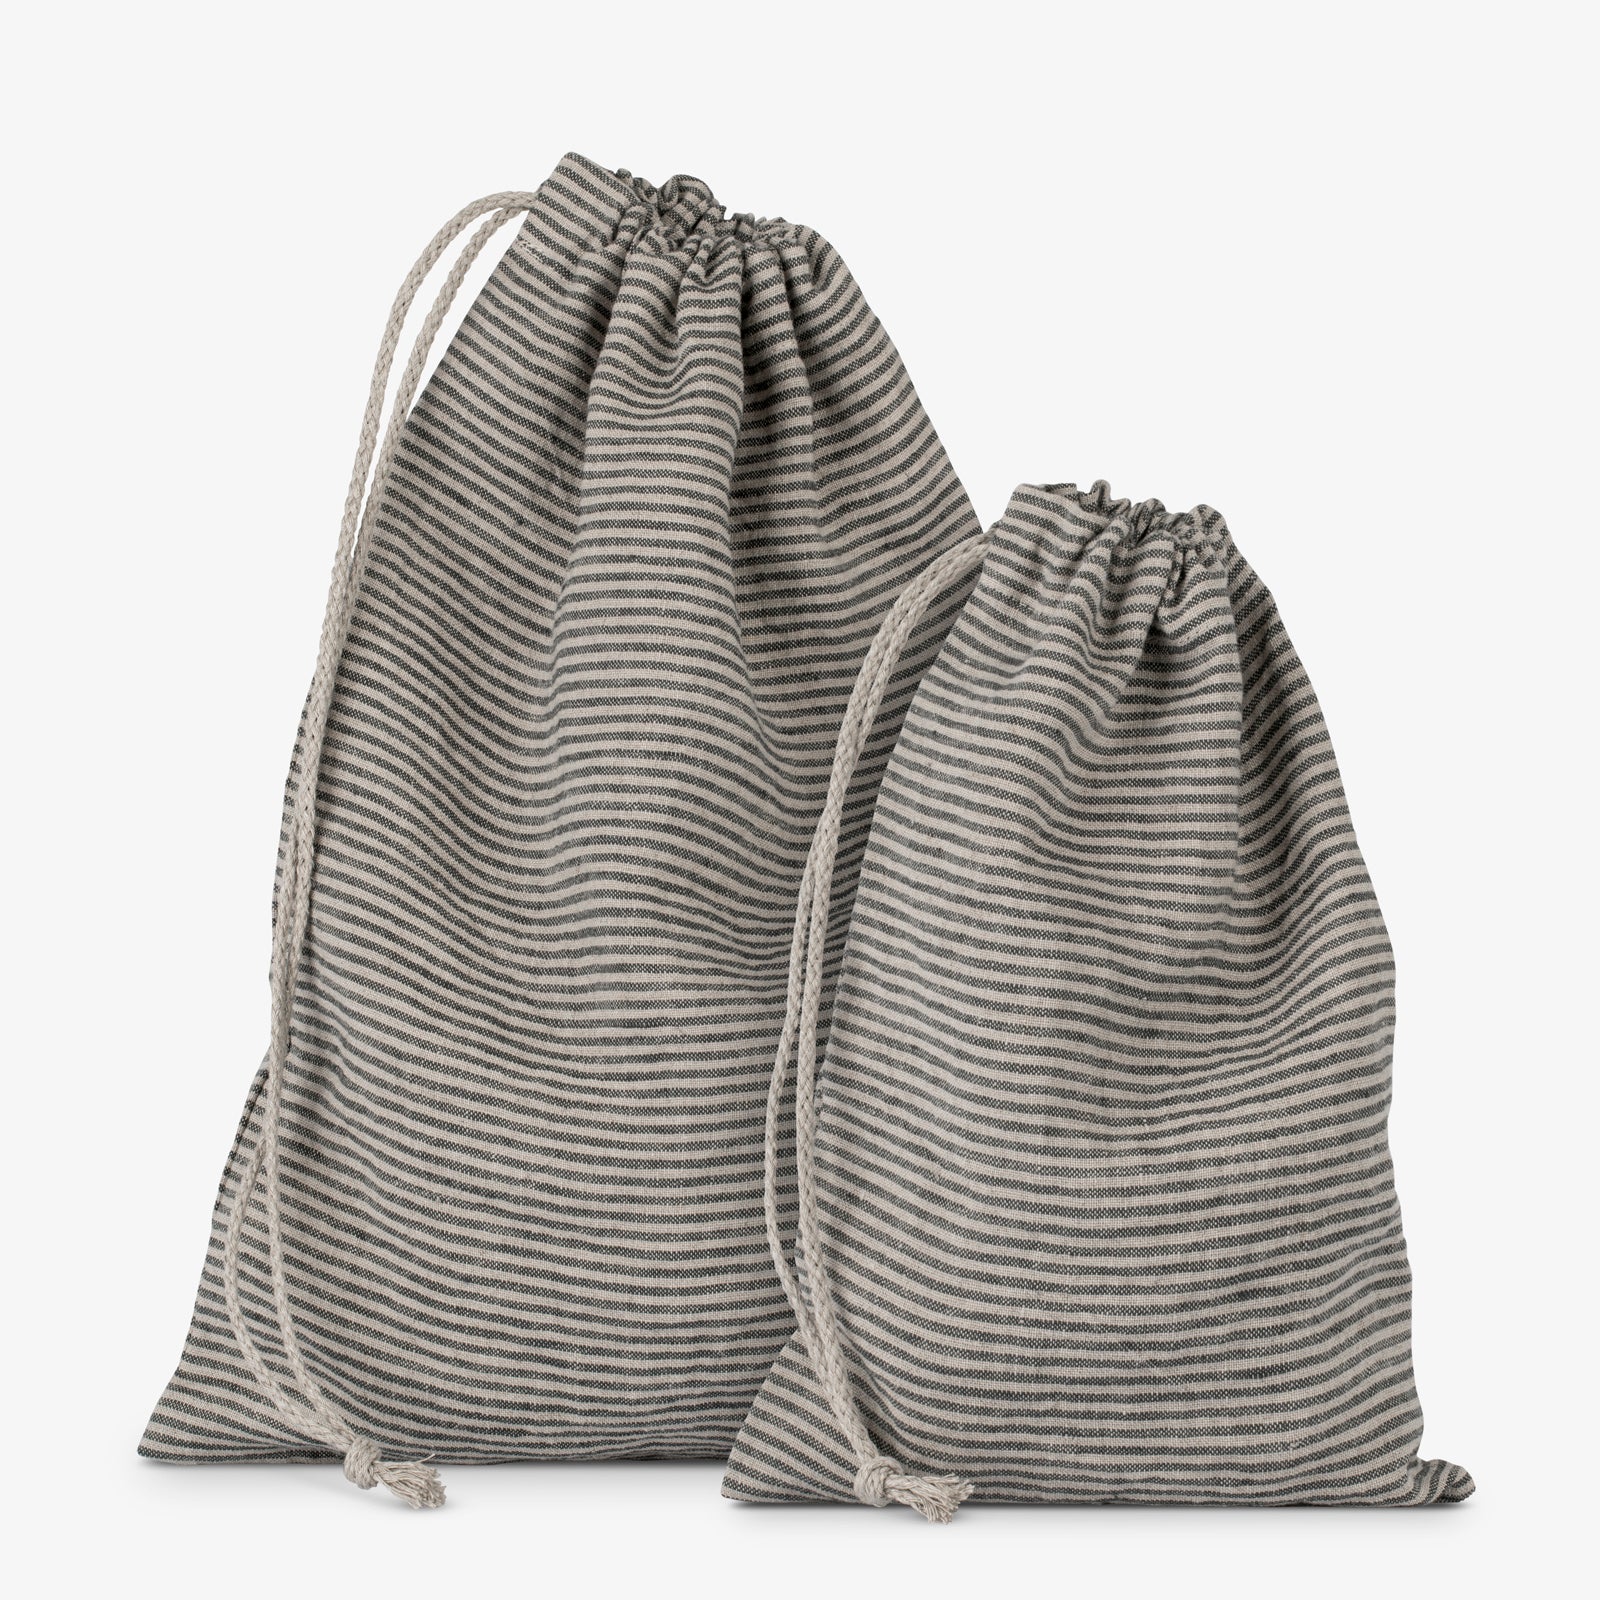 Linen drawstring bag